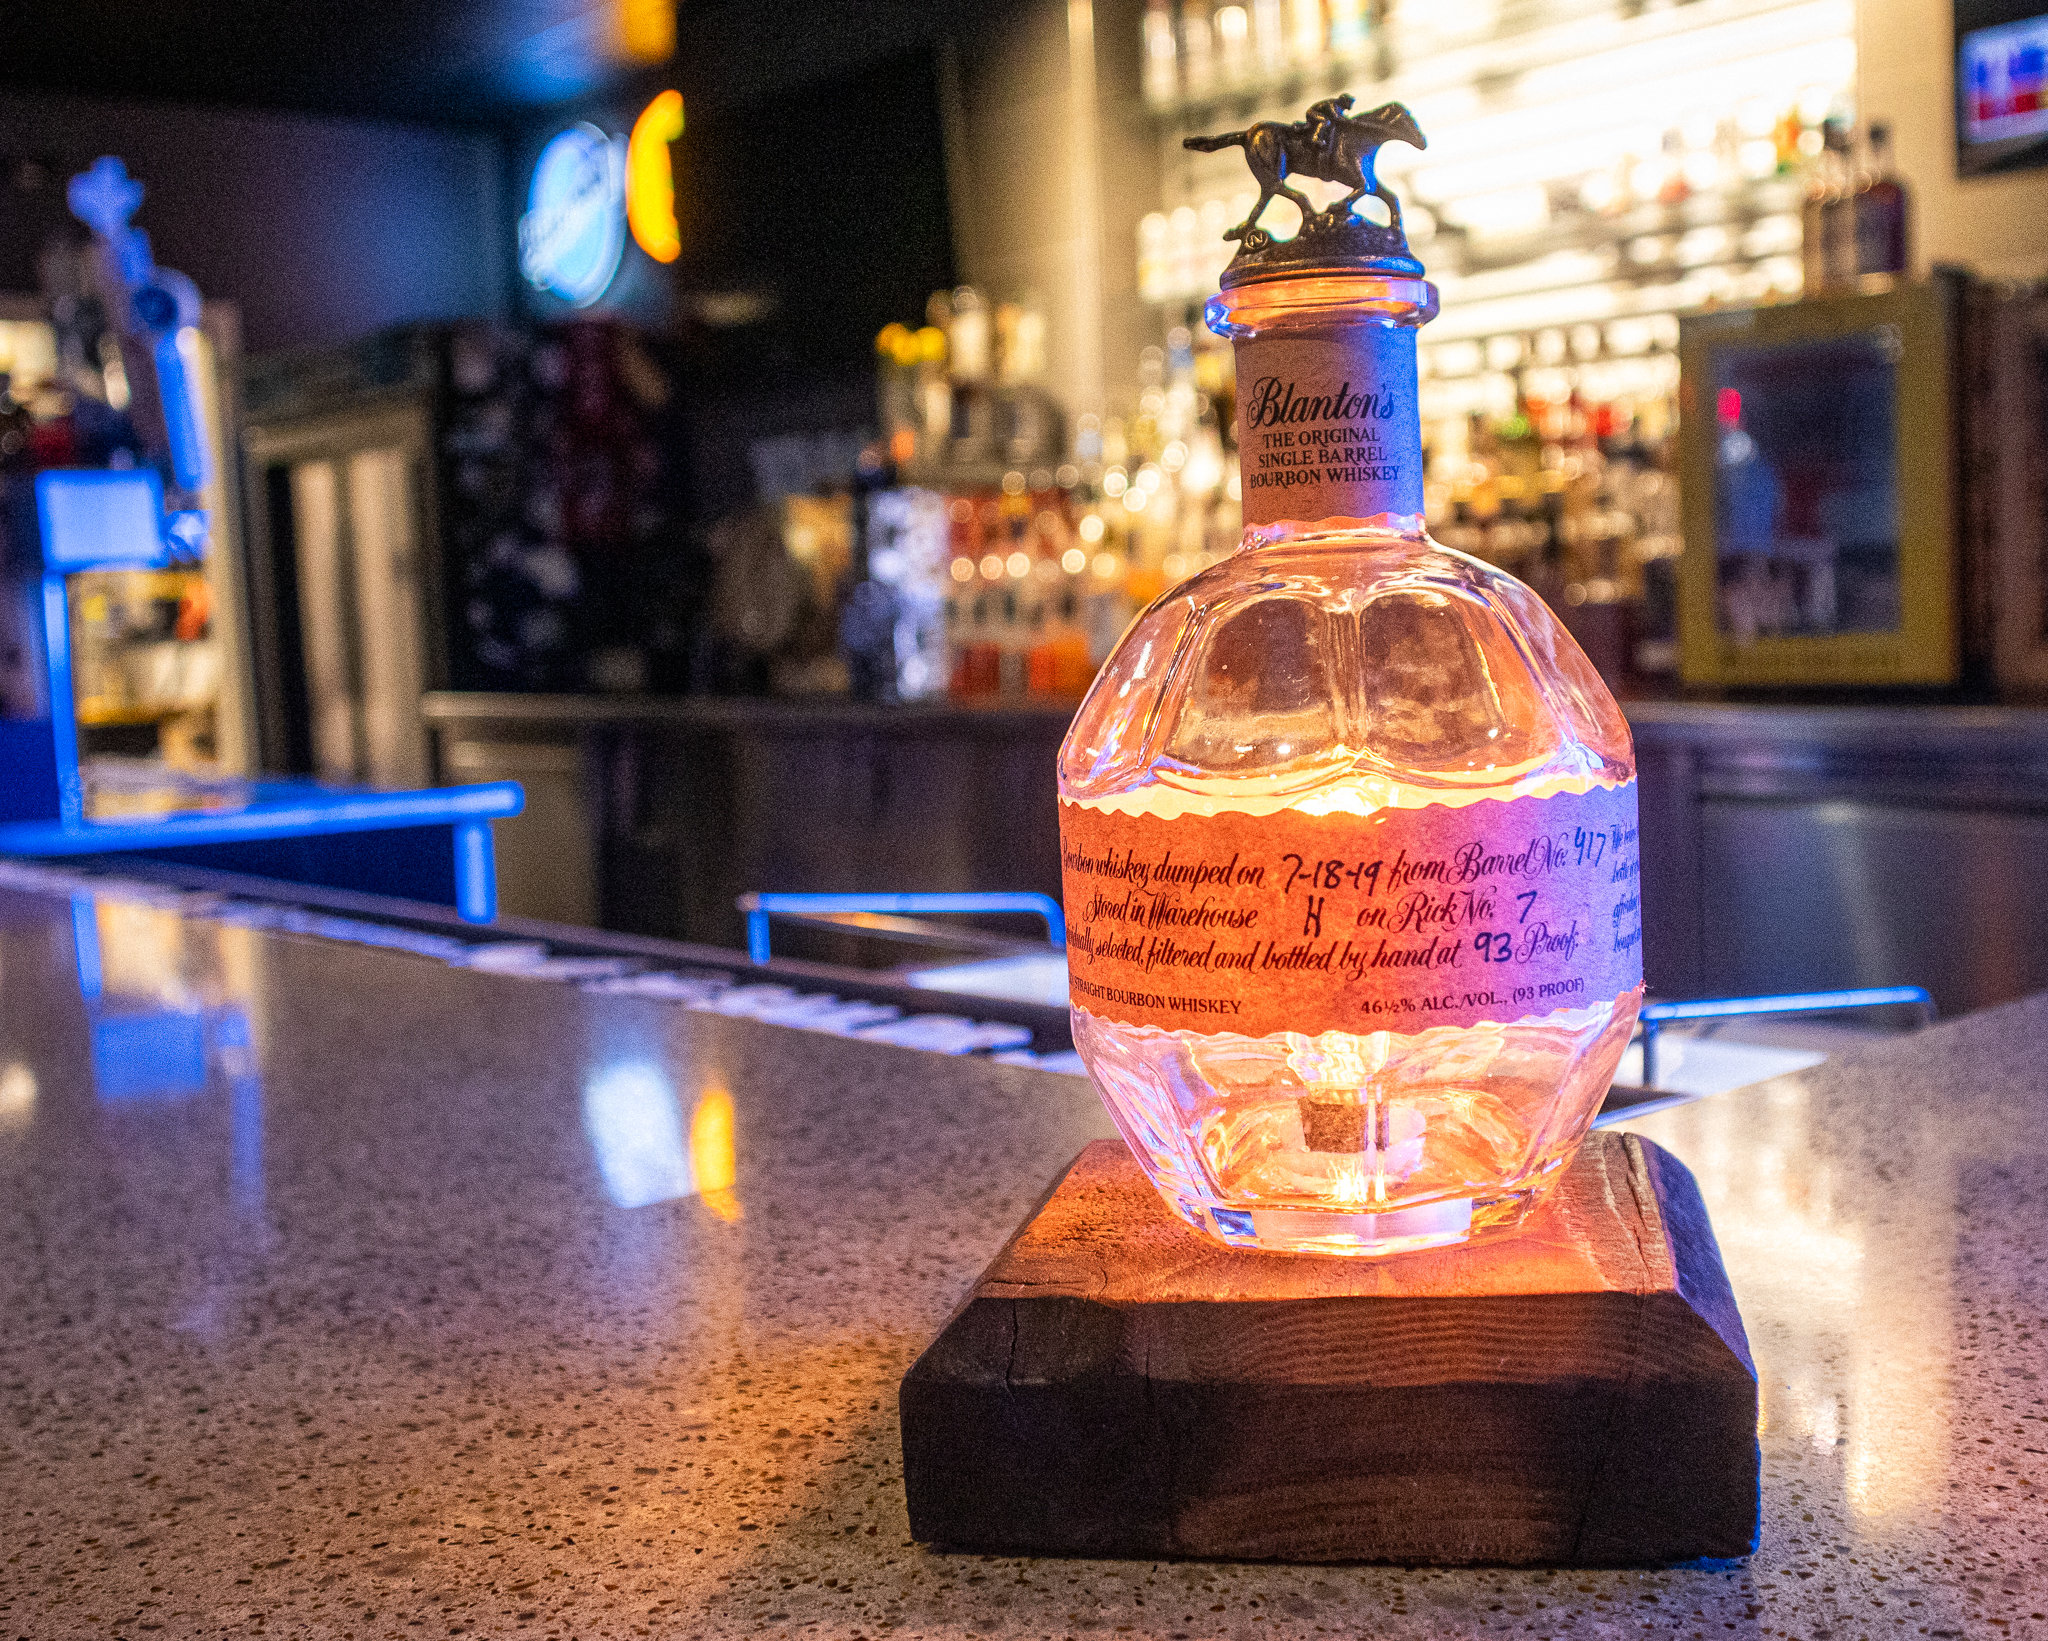 Blanton's Original Single Barrel Bourbon Whiskey 750ml - Town Liquor